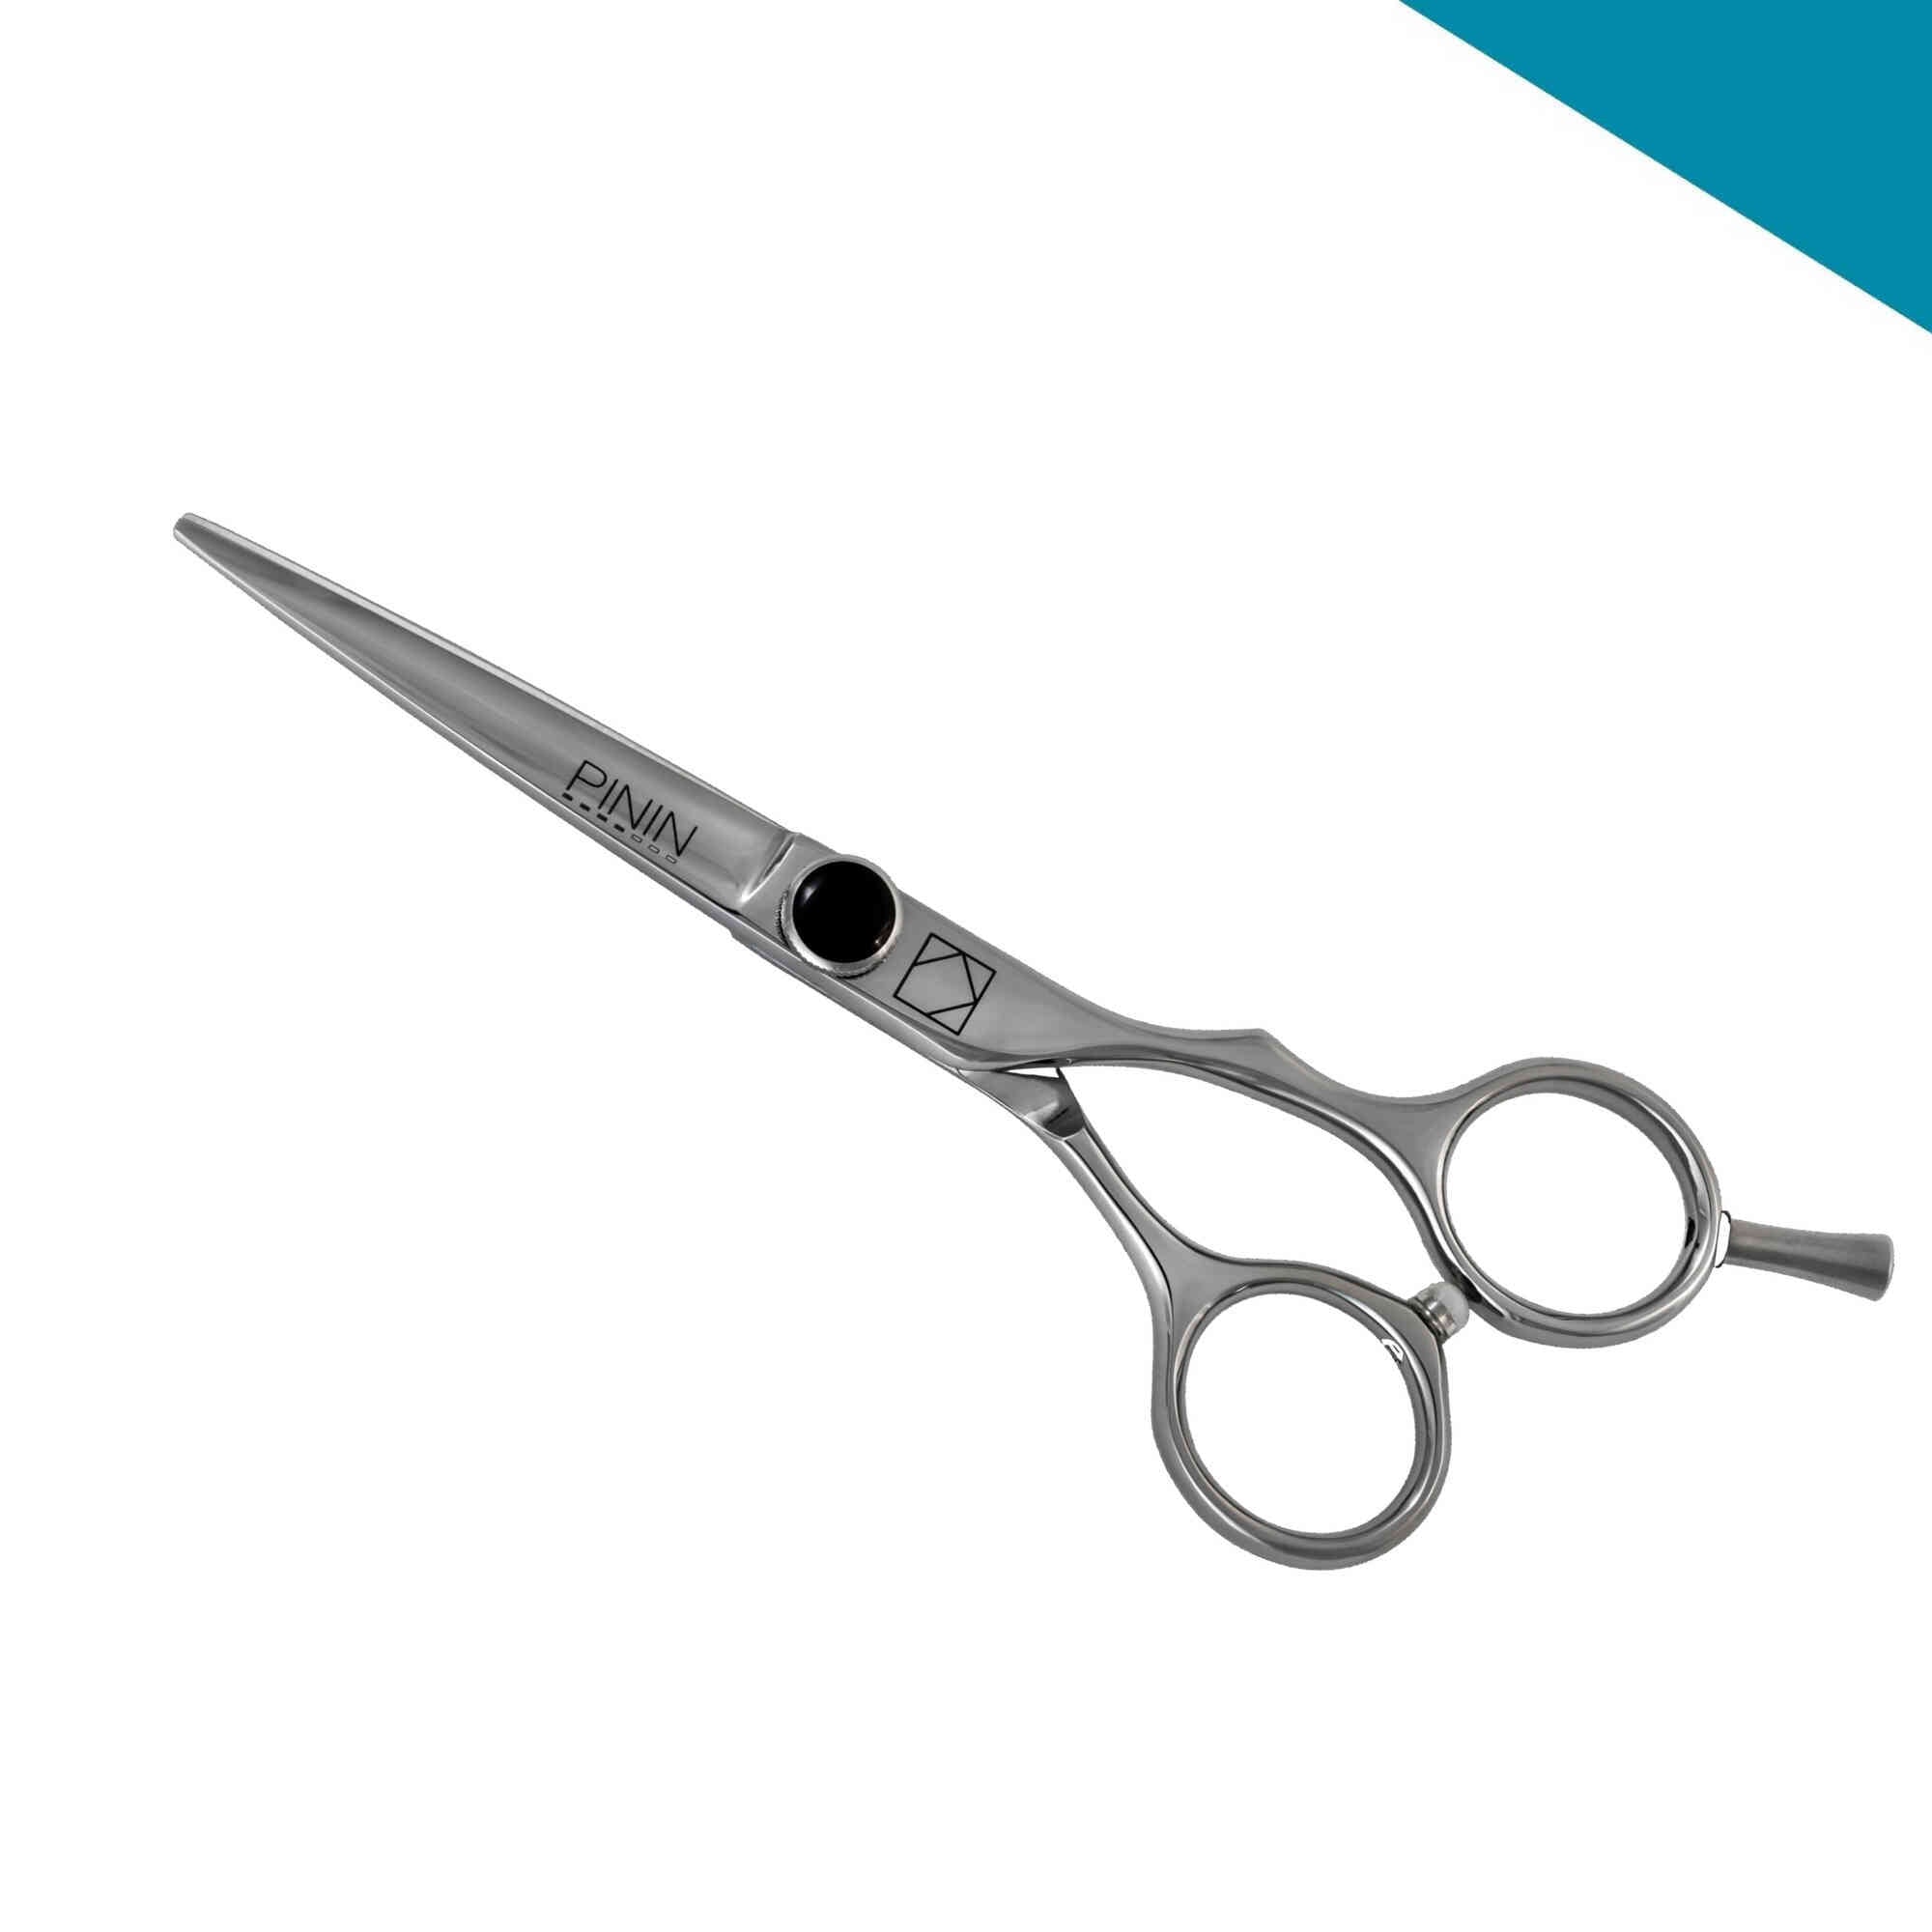 Pinin Q4 Maya Offset Hairdressing Scissors